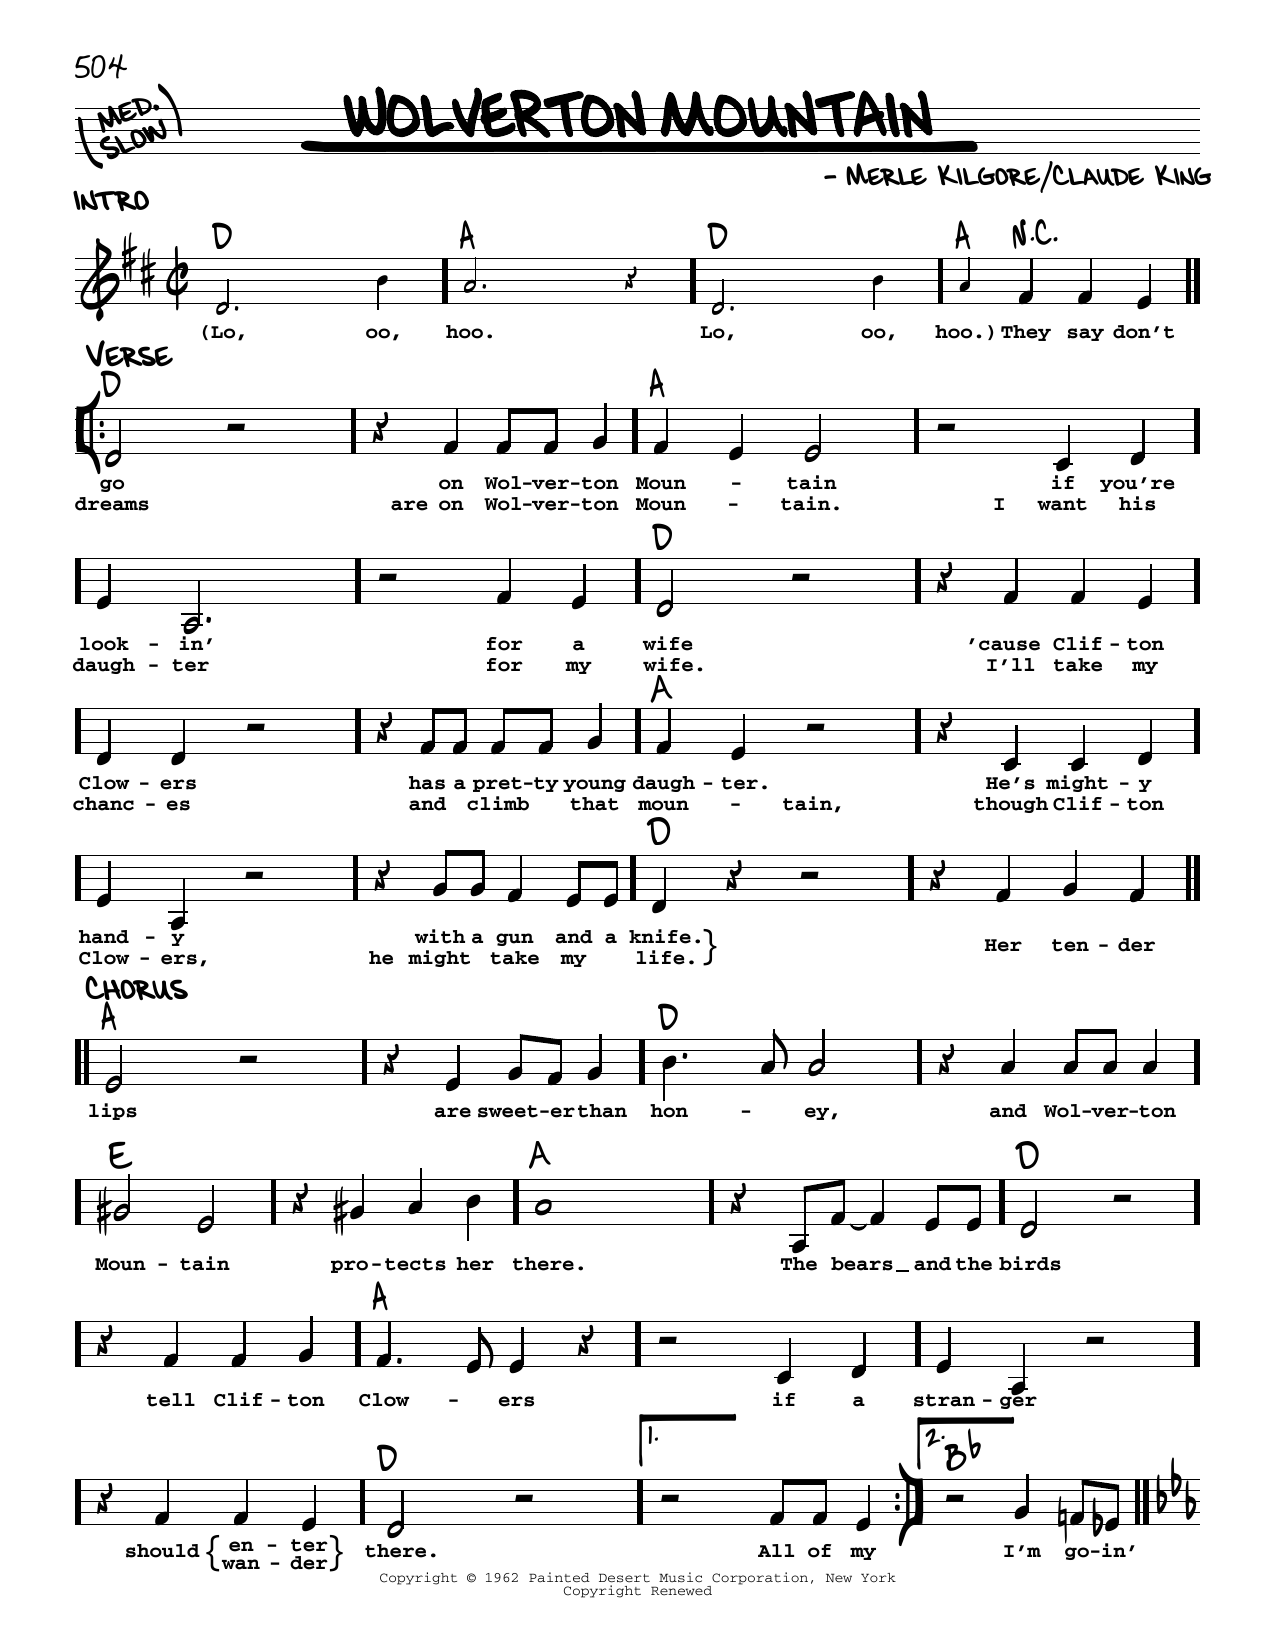 Claude King Wolverton Mountain Sheet Music Notes & Chords for Real Book – Melody, Lyrics & Chords - Download or Print PDF